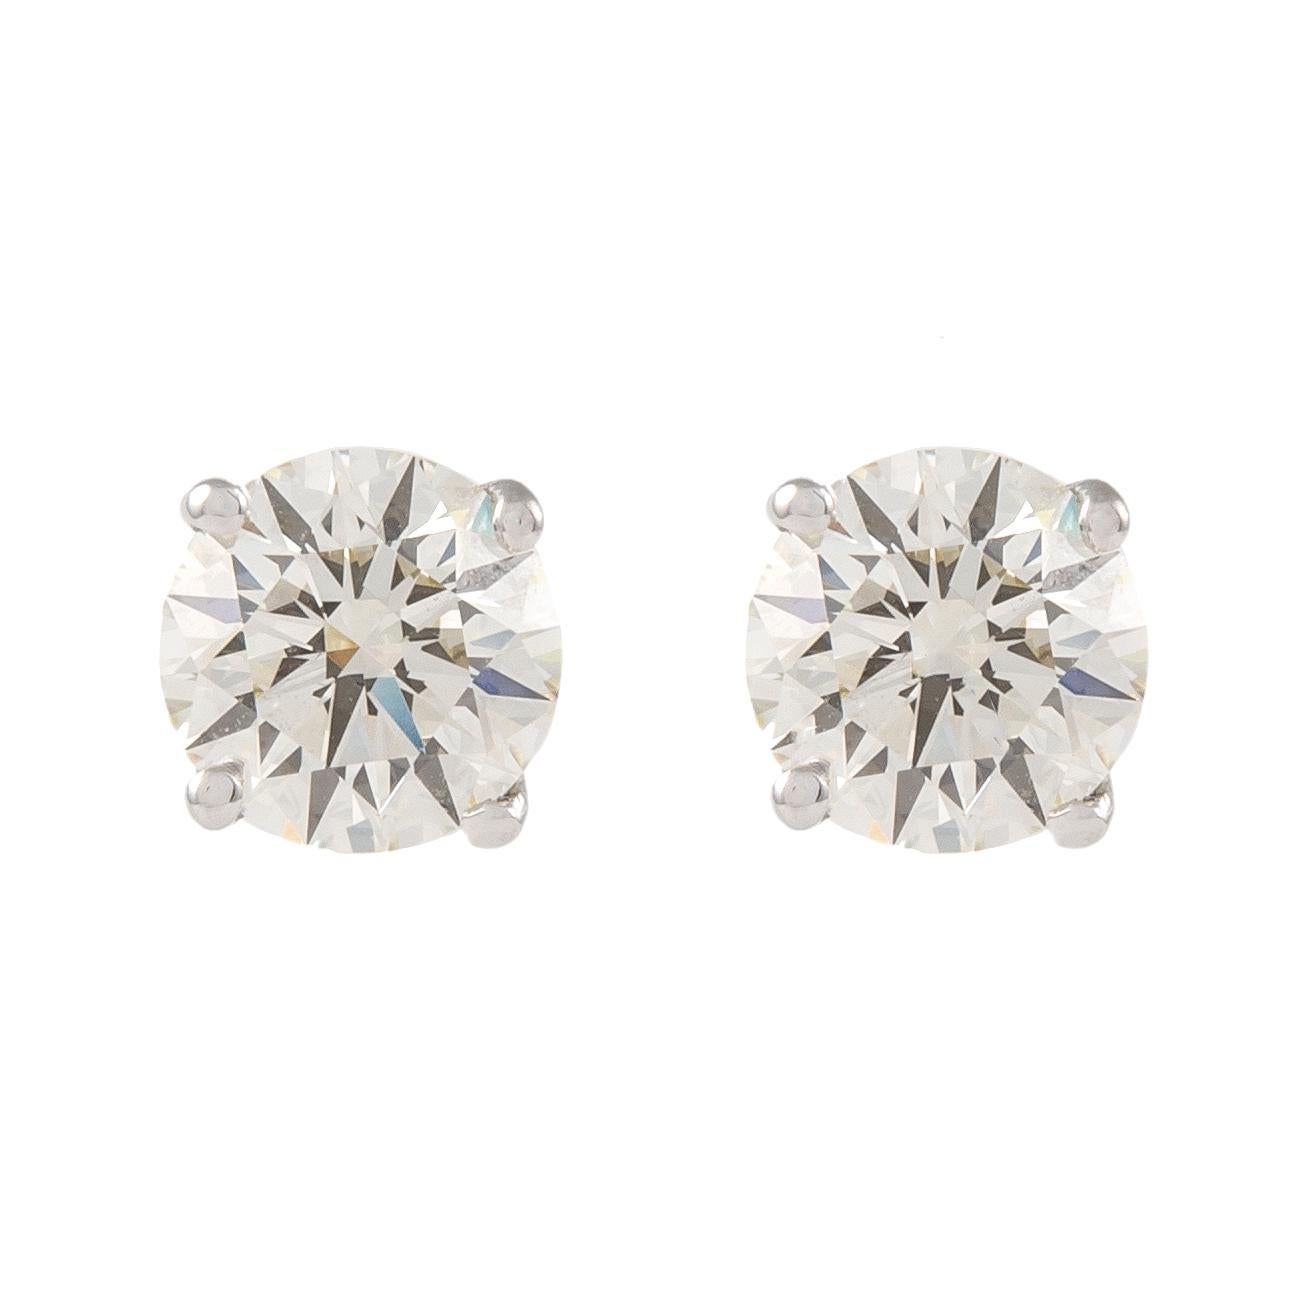 Round Cut Alexander EGL Certified 1.44 Carat Diamond Stud Earrings White Gold For Sale